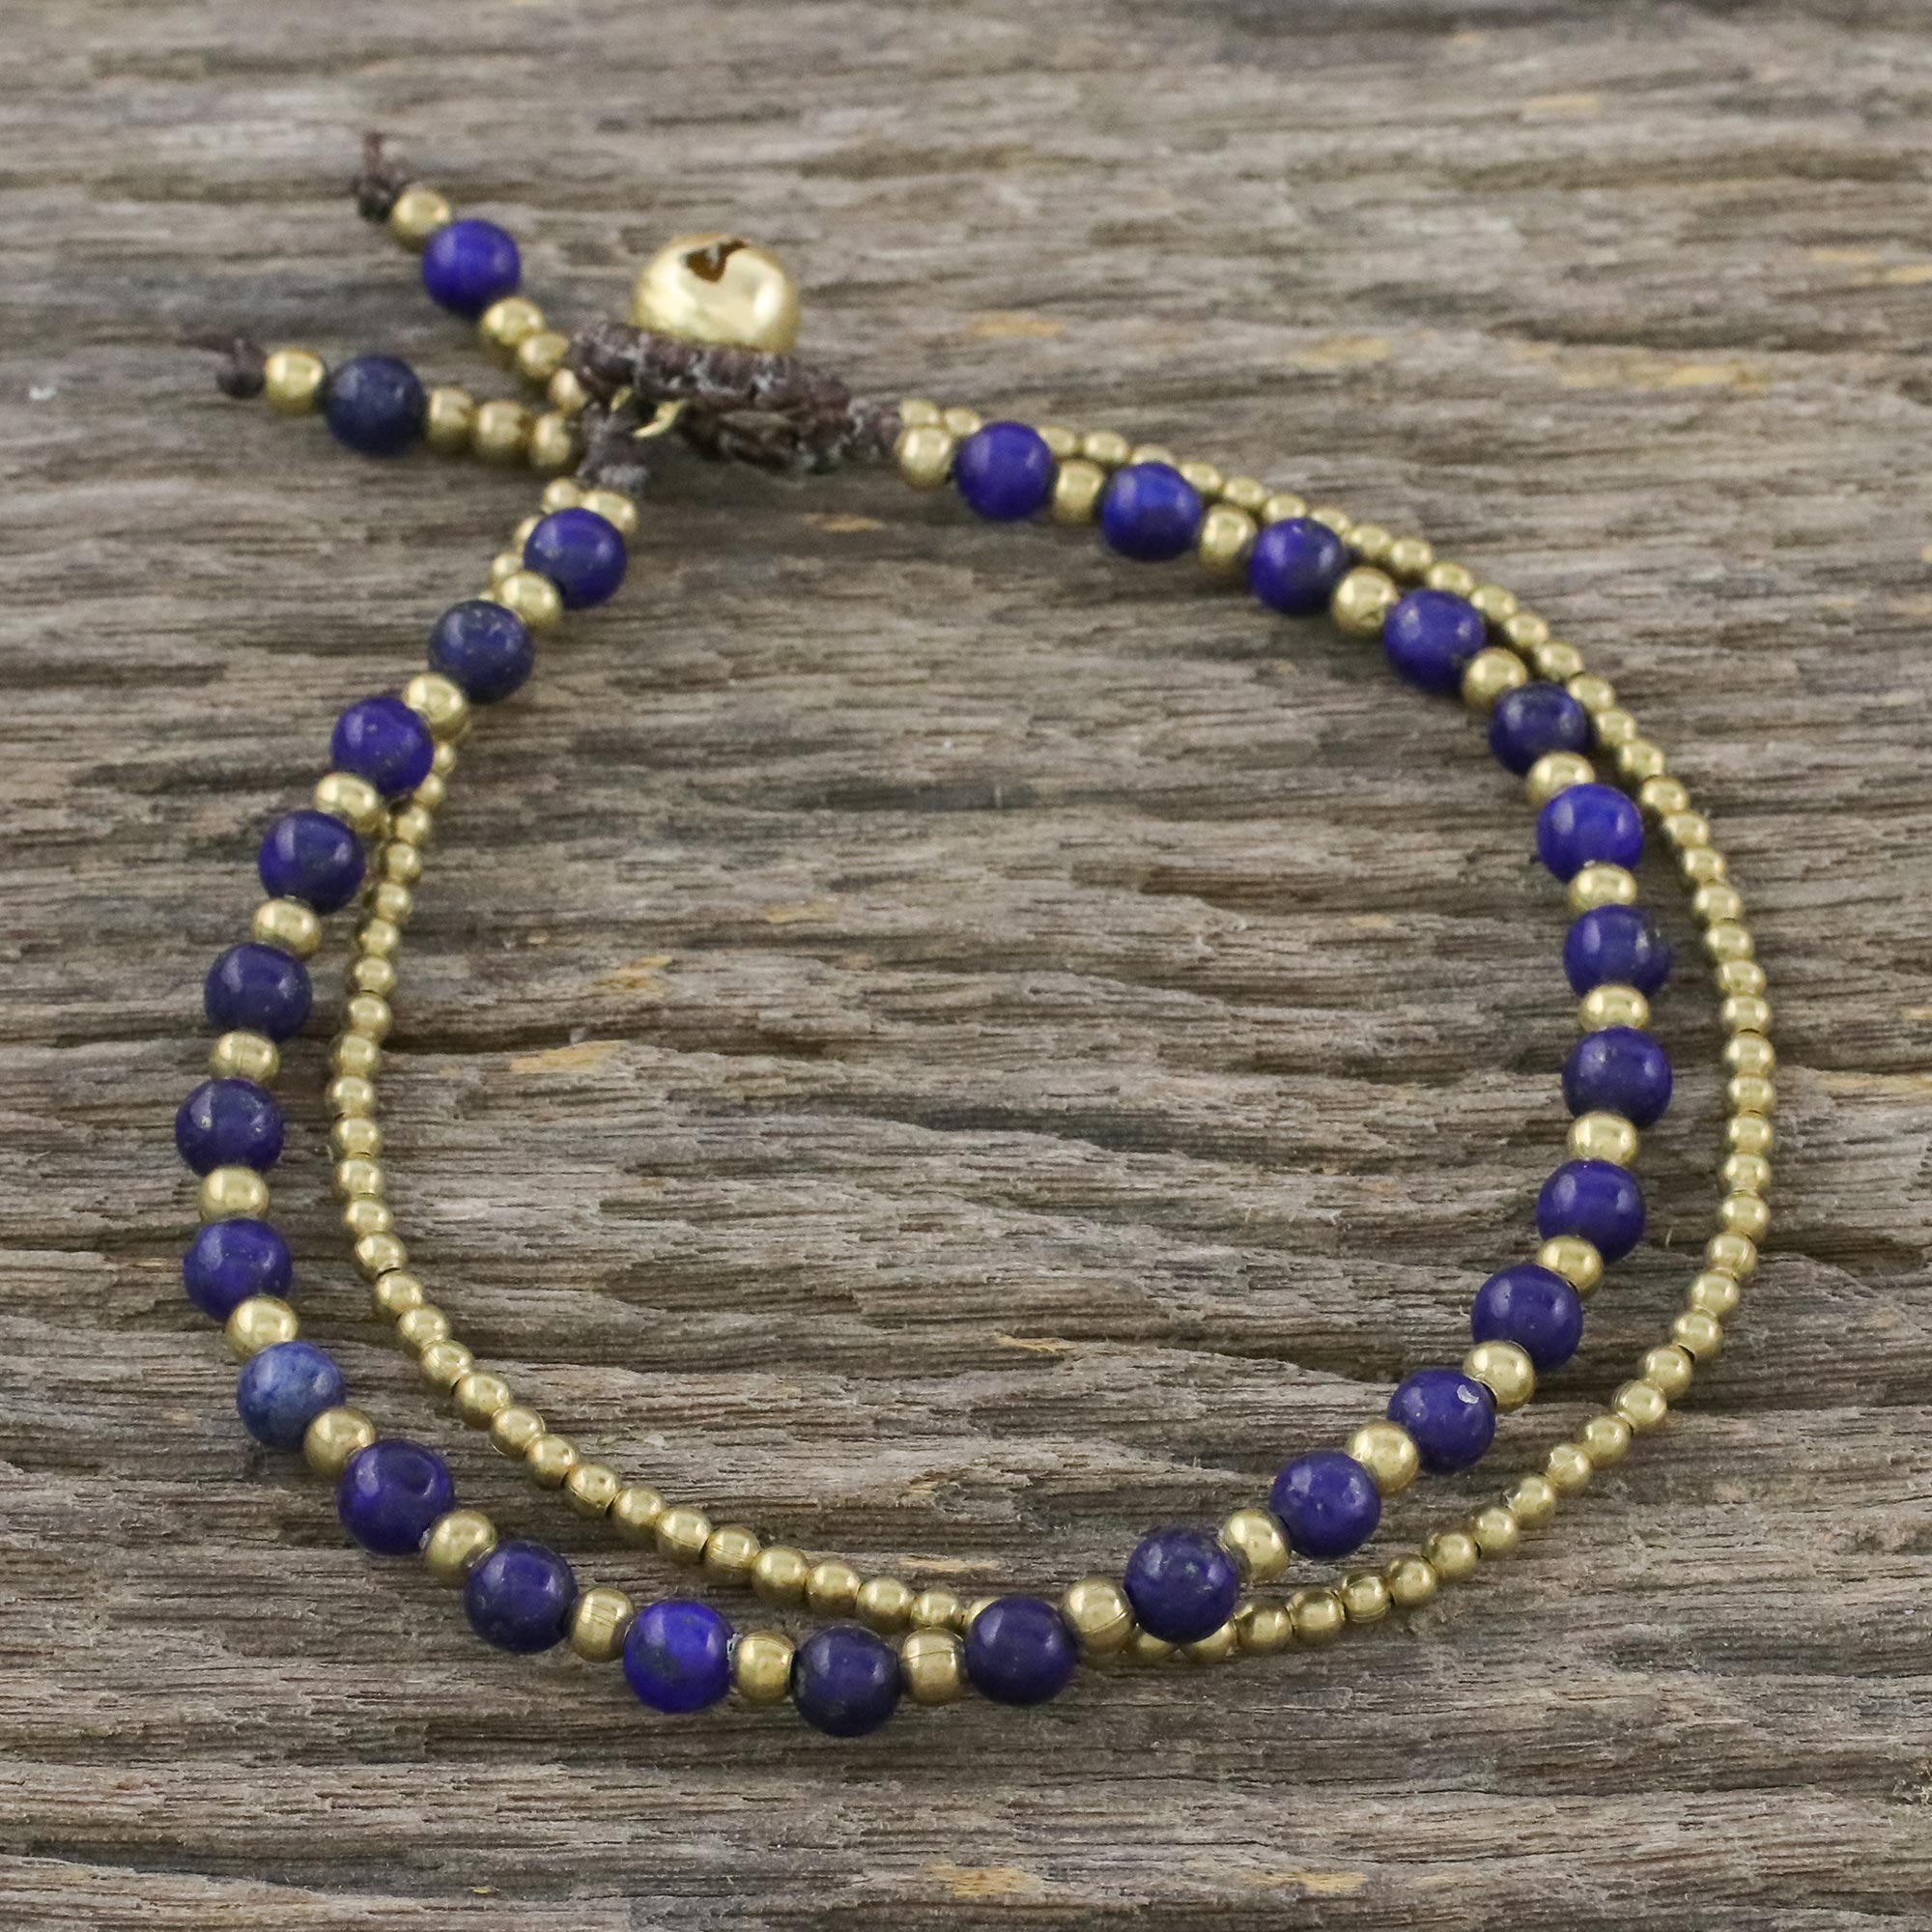 Handmade Lapis Lazuli Brass Beaded Bracelet with Loop, 'Valley of Lapis'